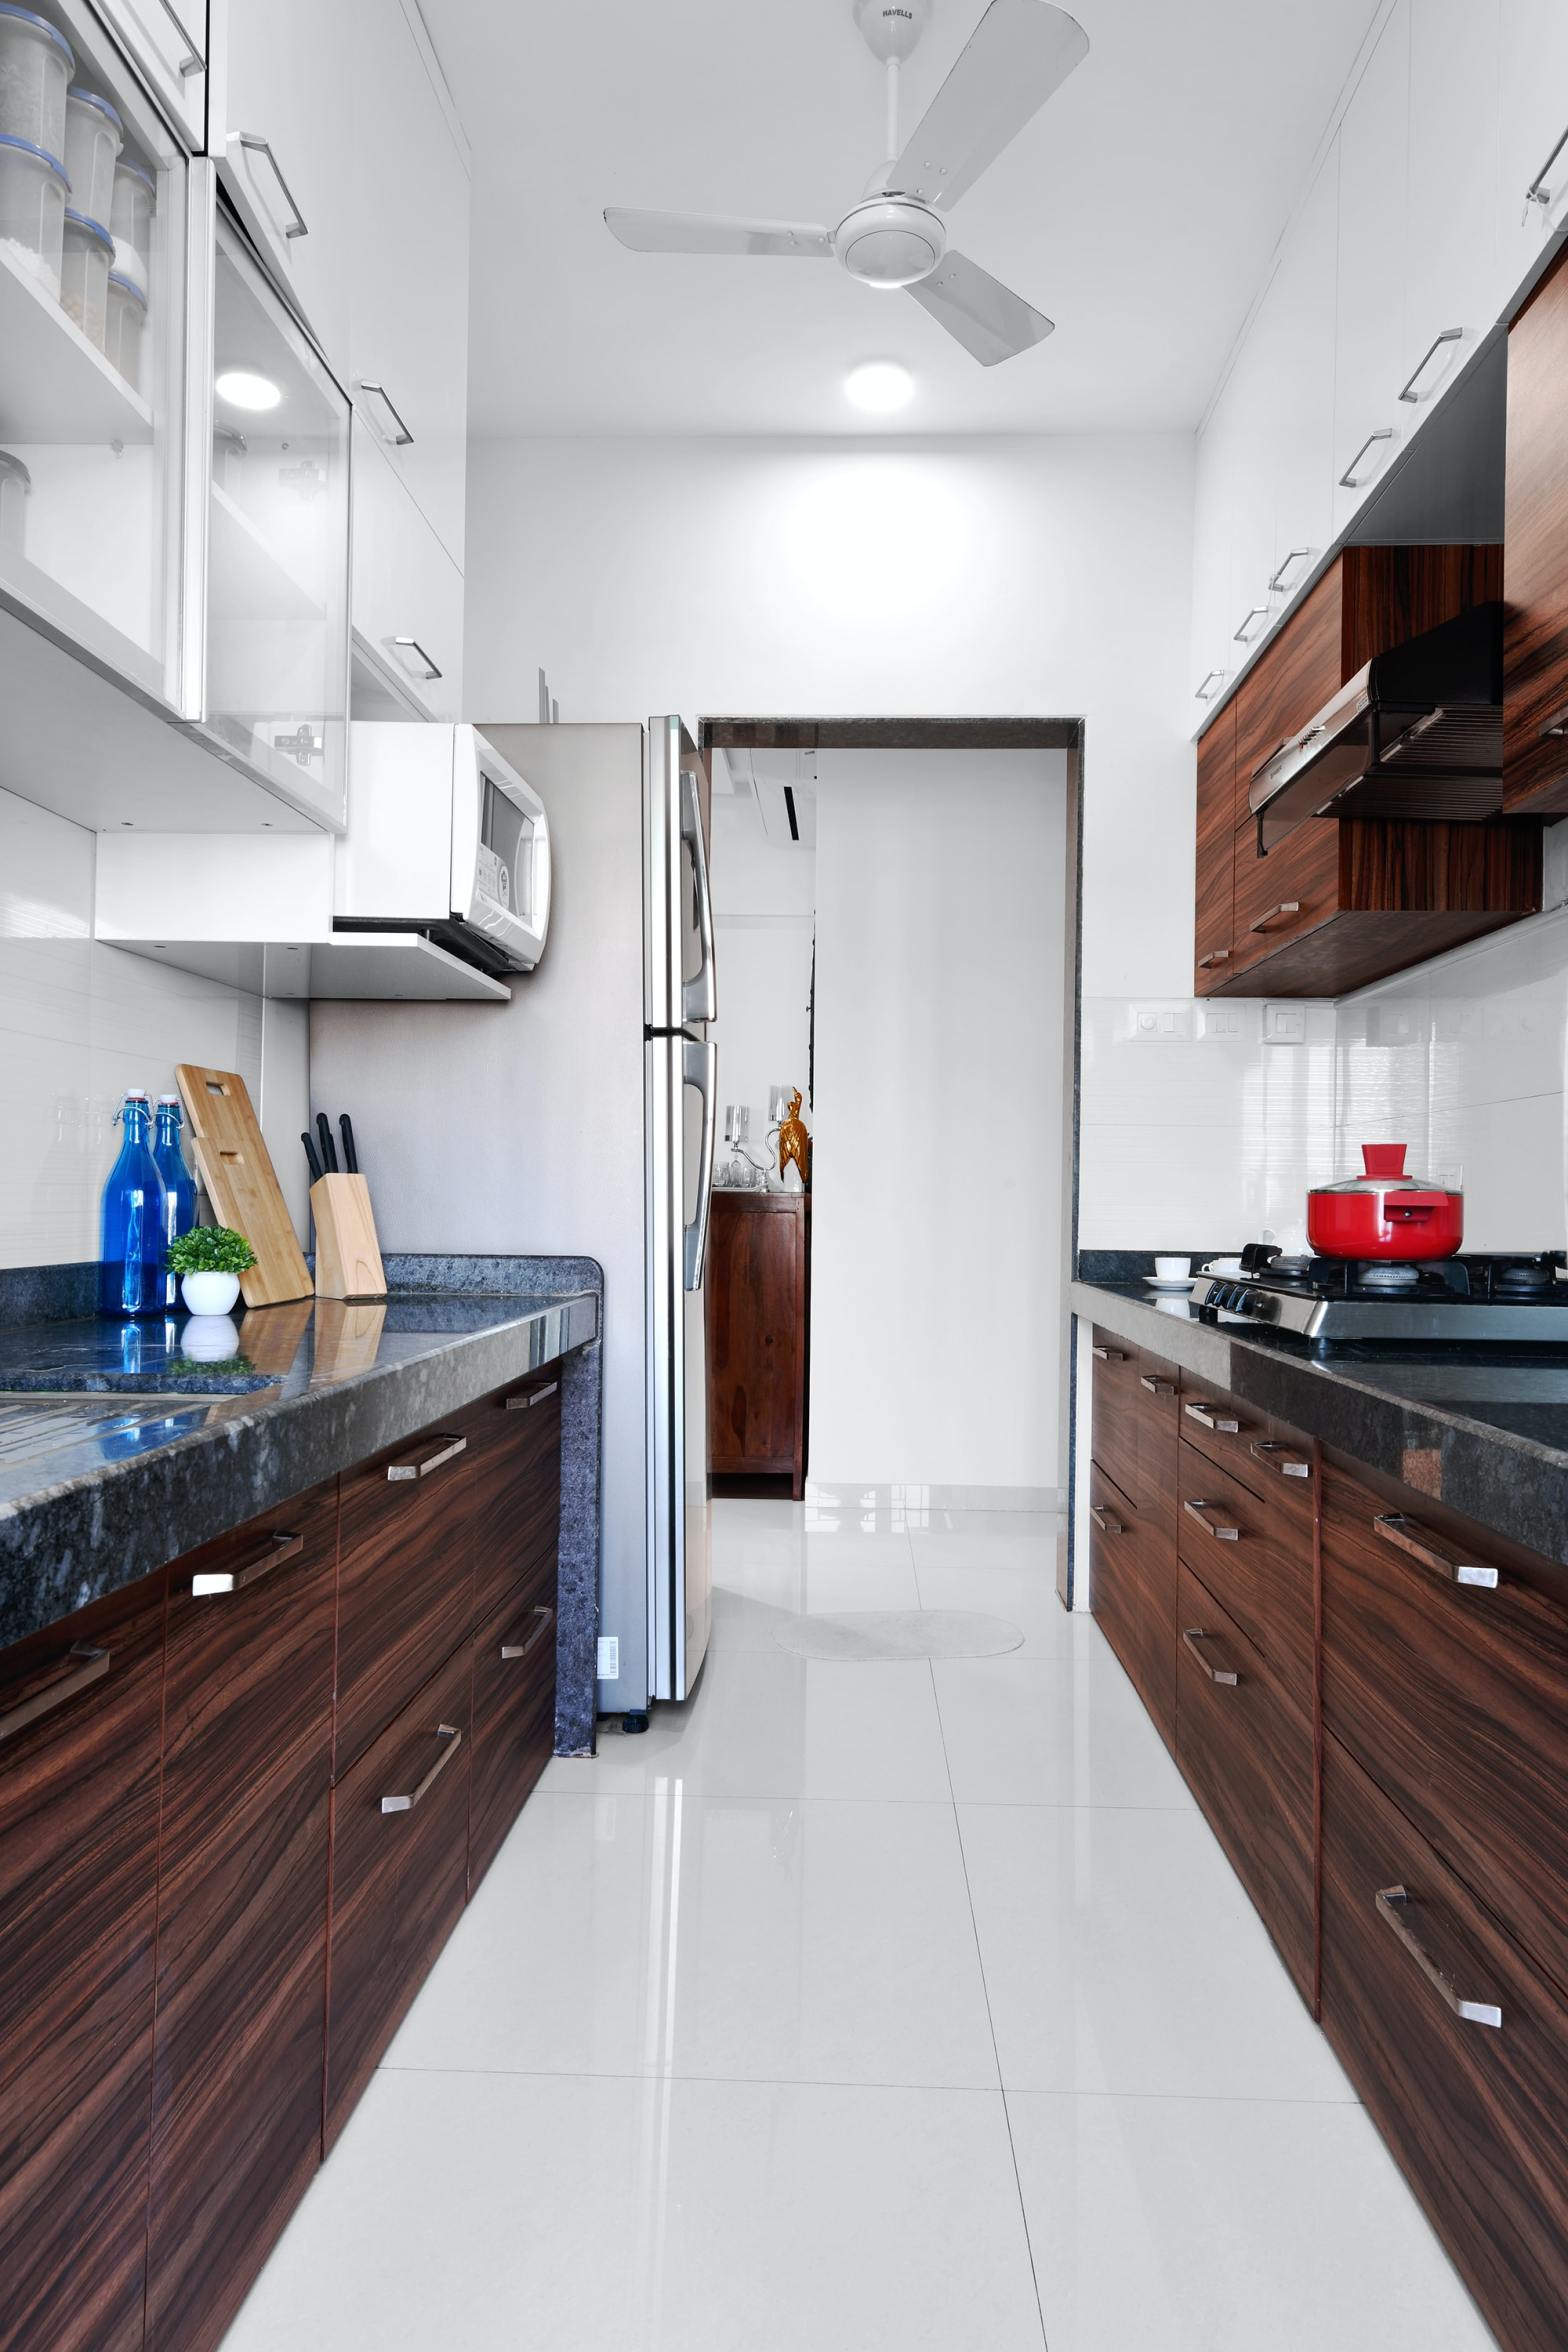 quartz countertops | kitchen renovation | remodeling ideas | quartz edge styles